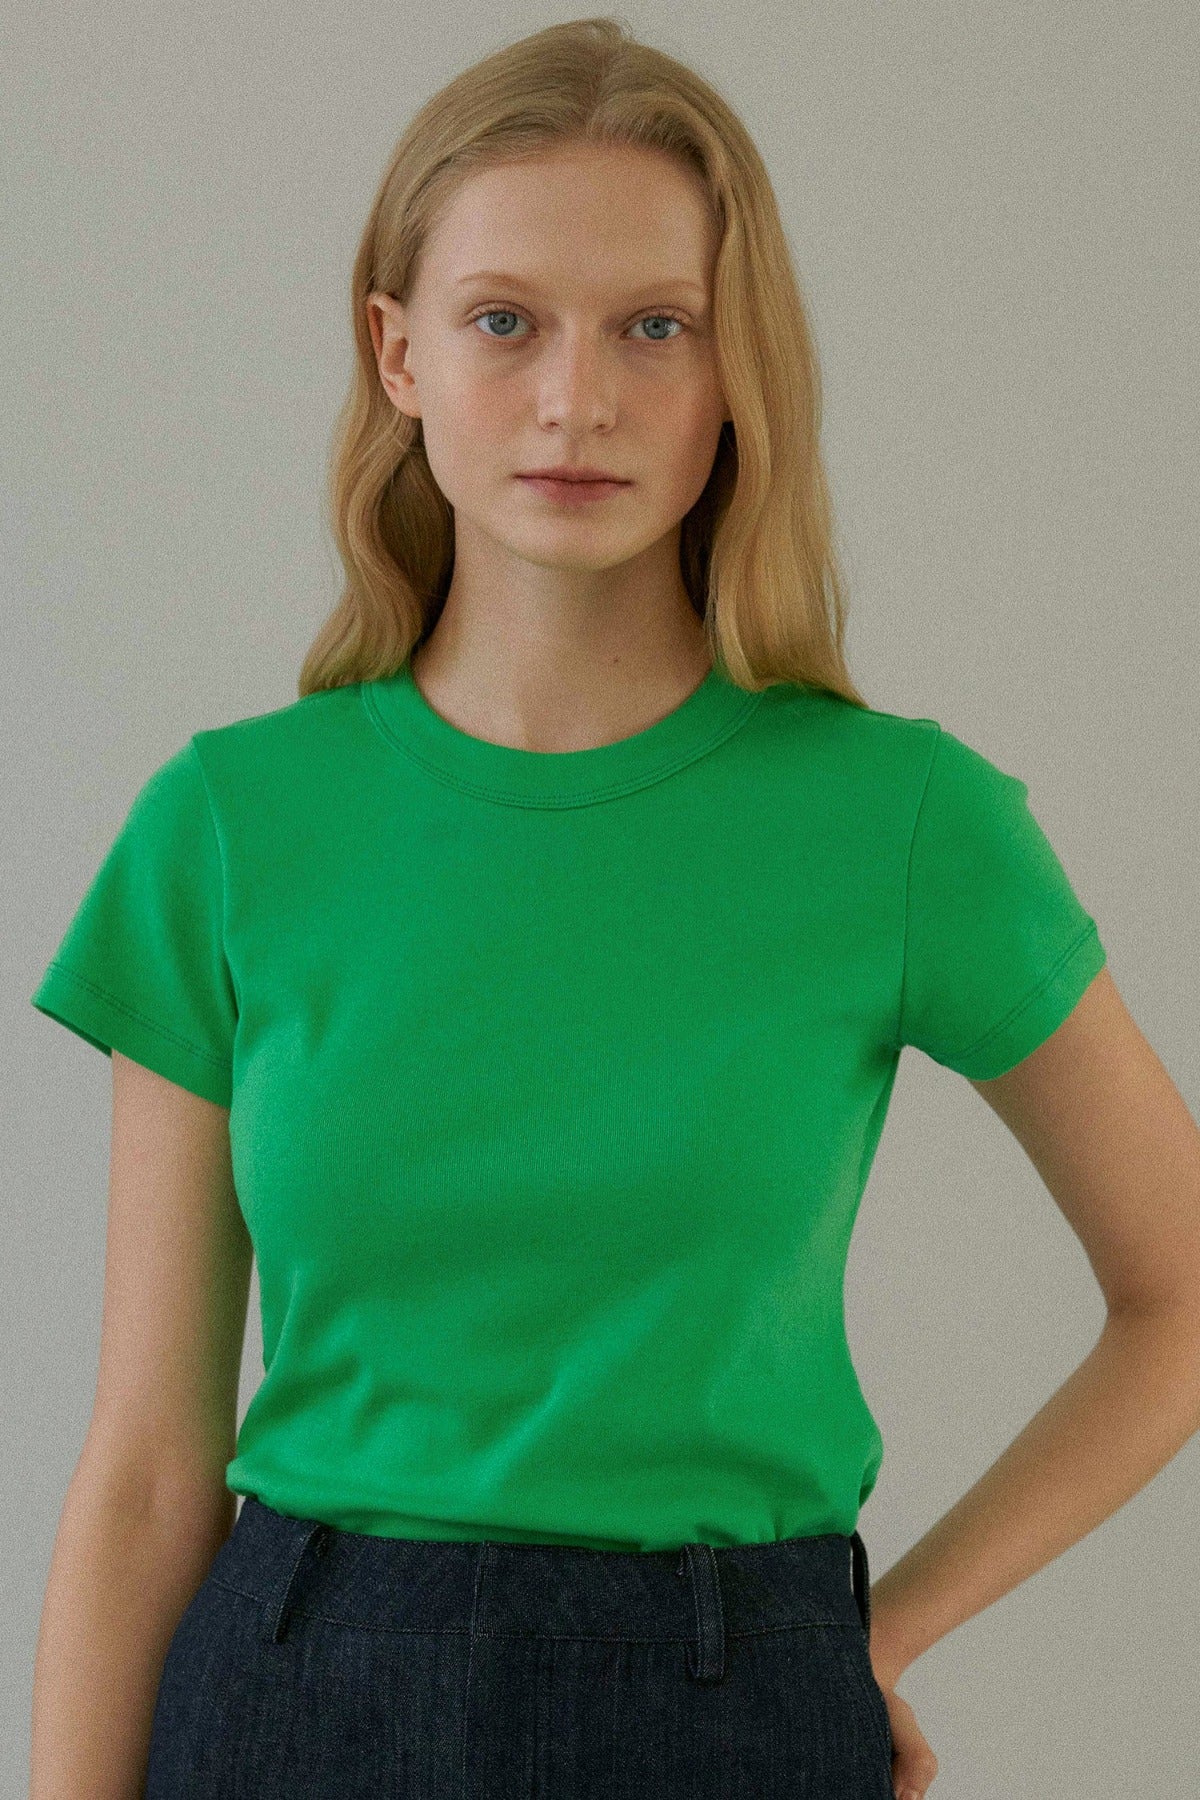 66.organiccottonribt-shirt_4colors_5.jpg